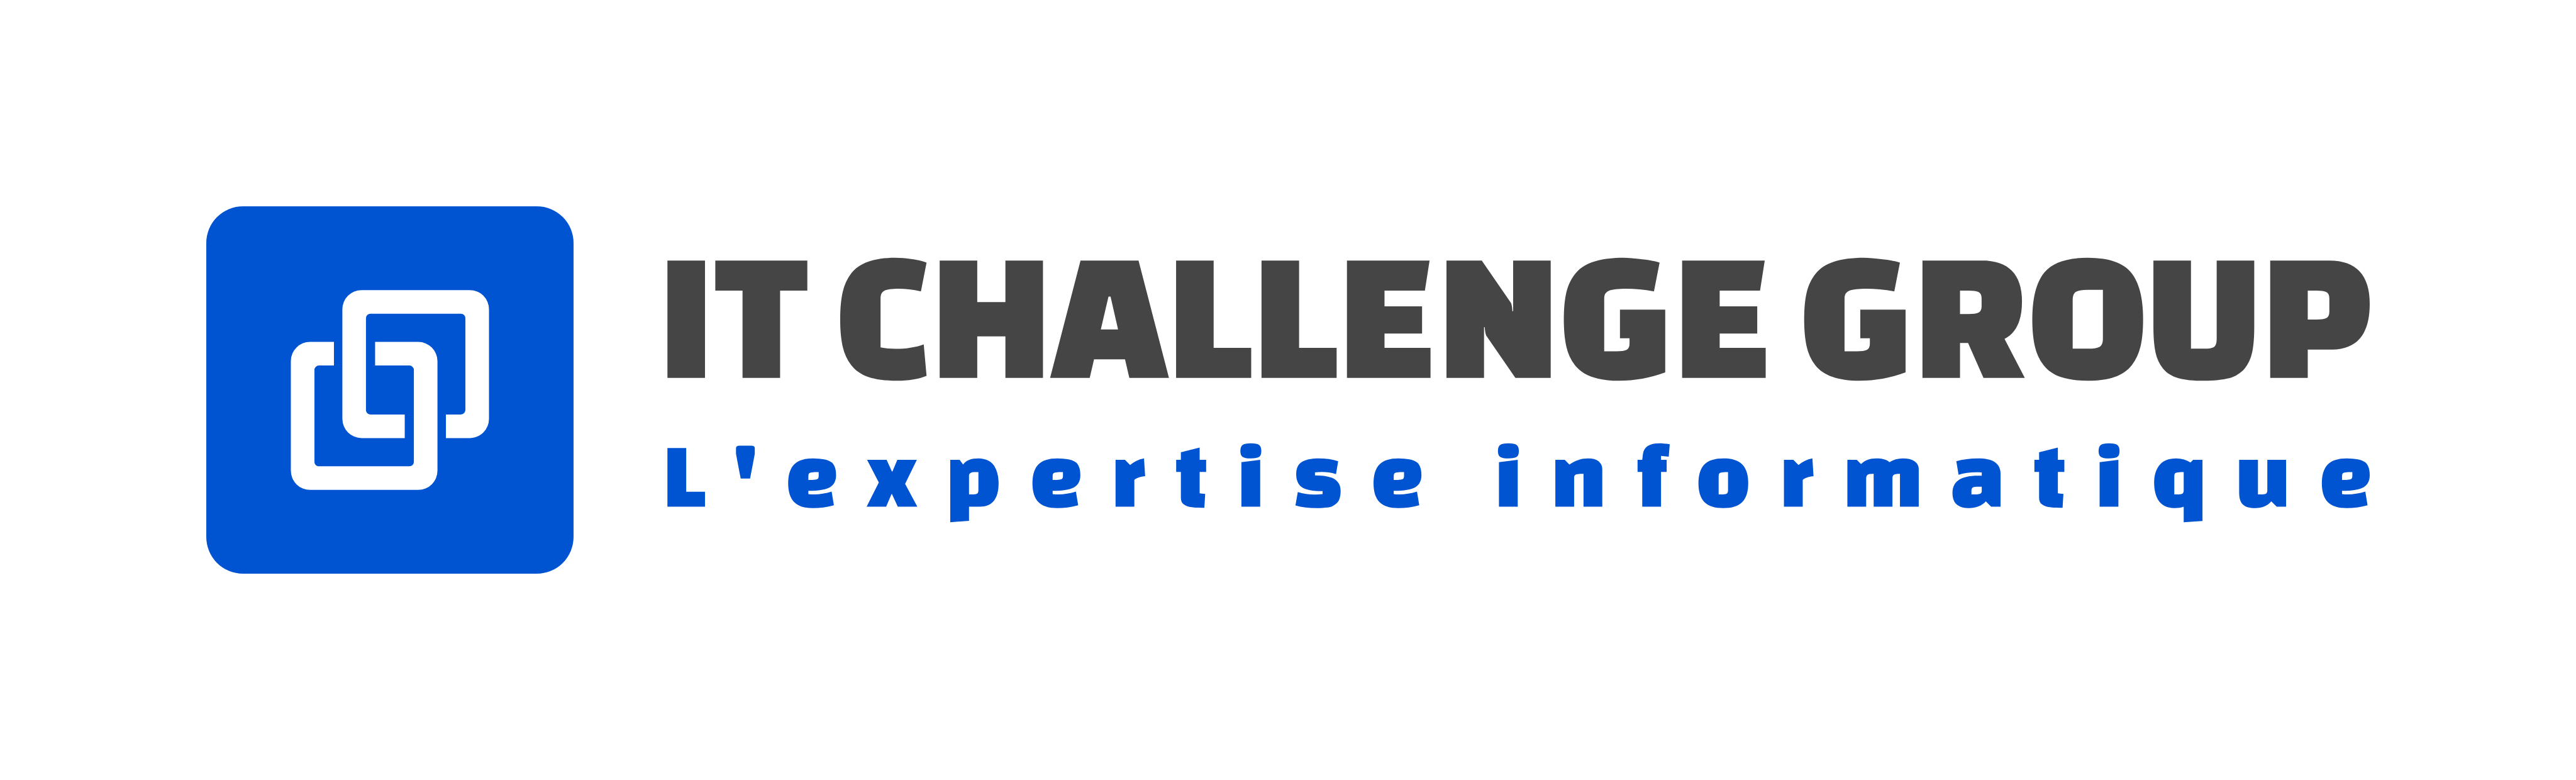 IT Challenge Group